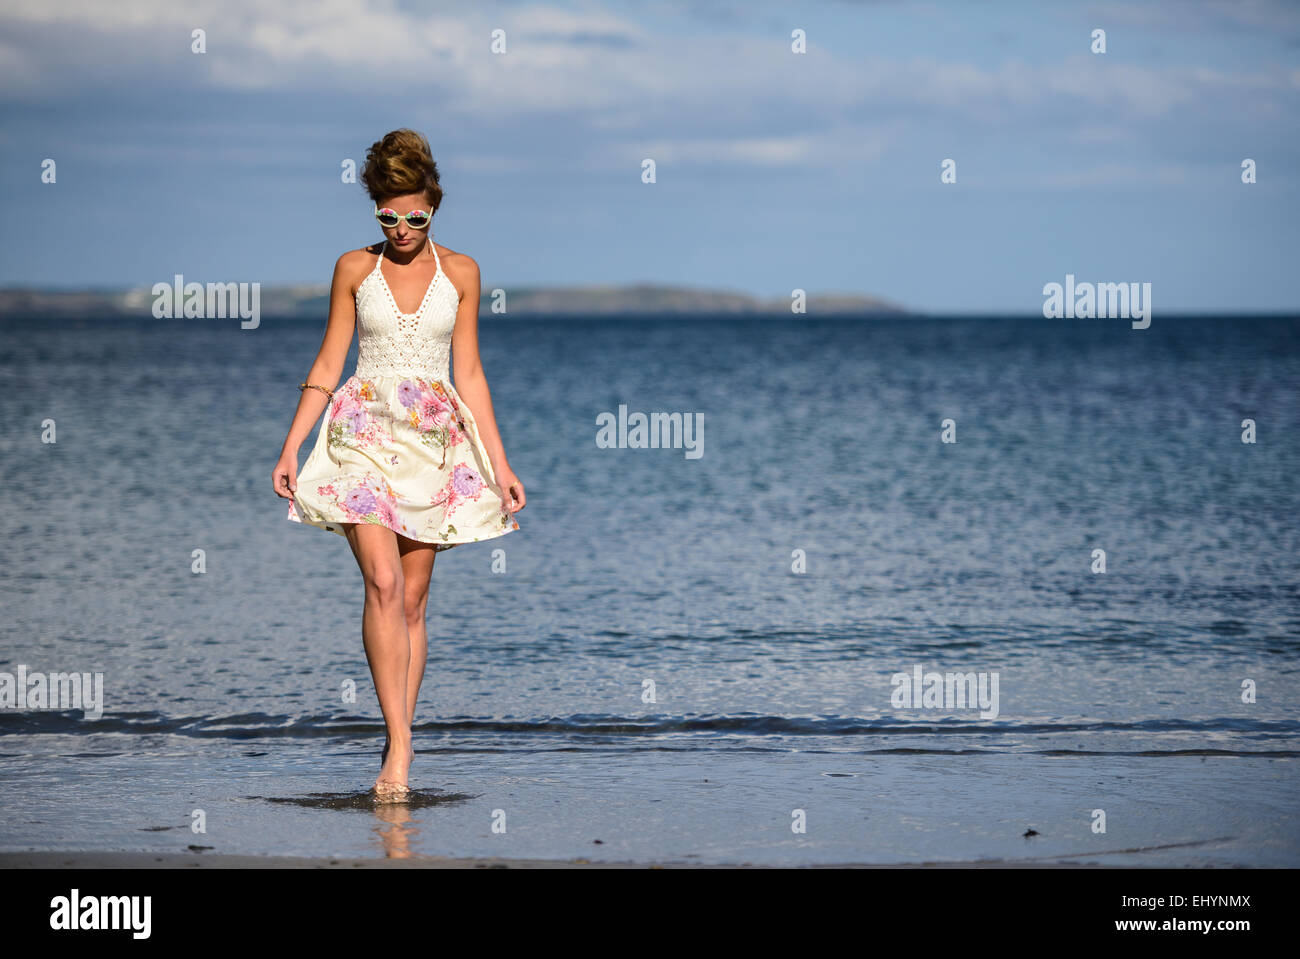 Junge Frau am Strand entlang spazieren Stockfoto